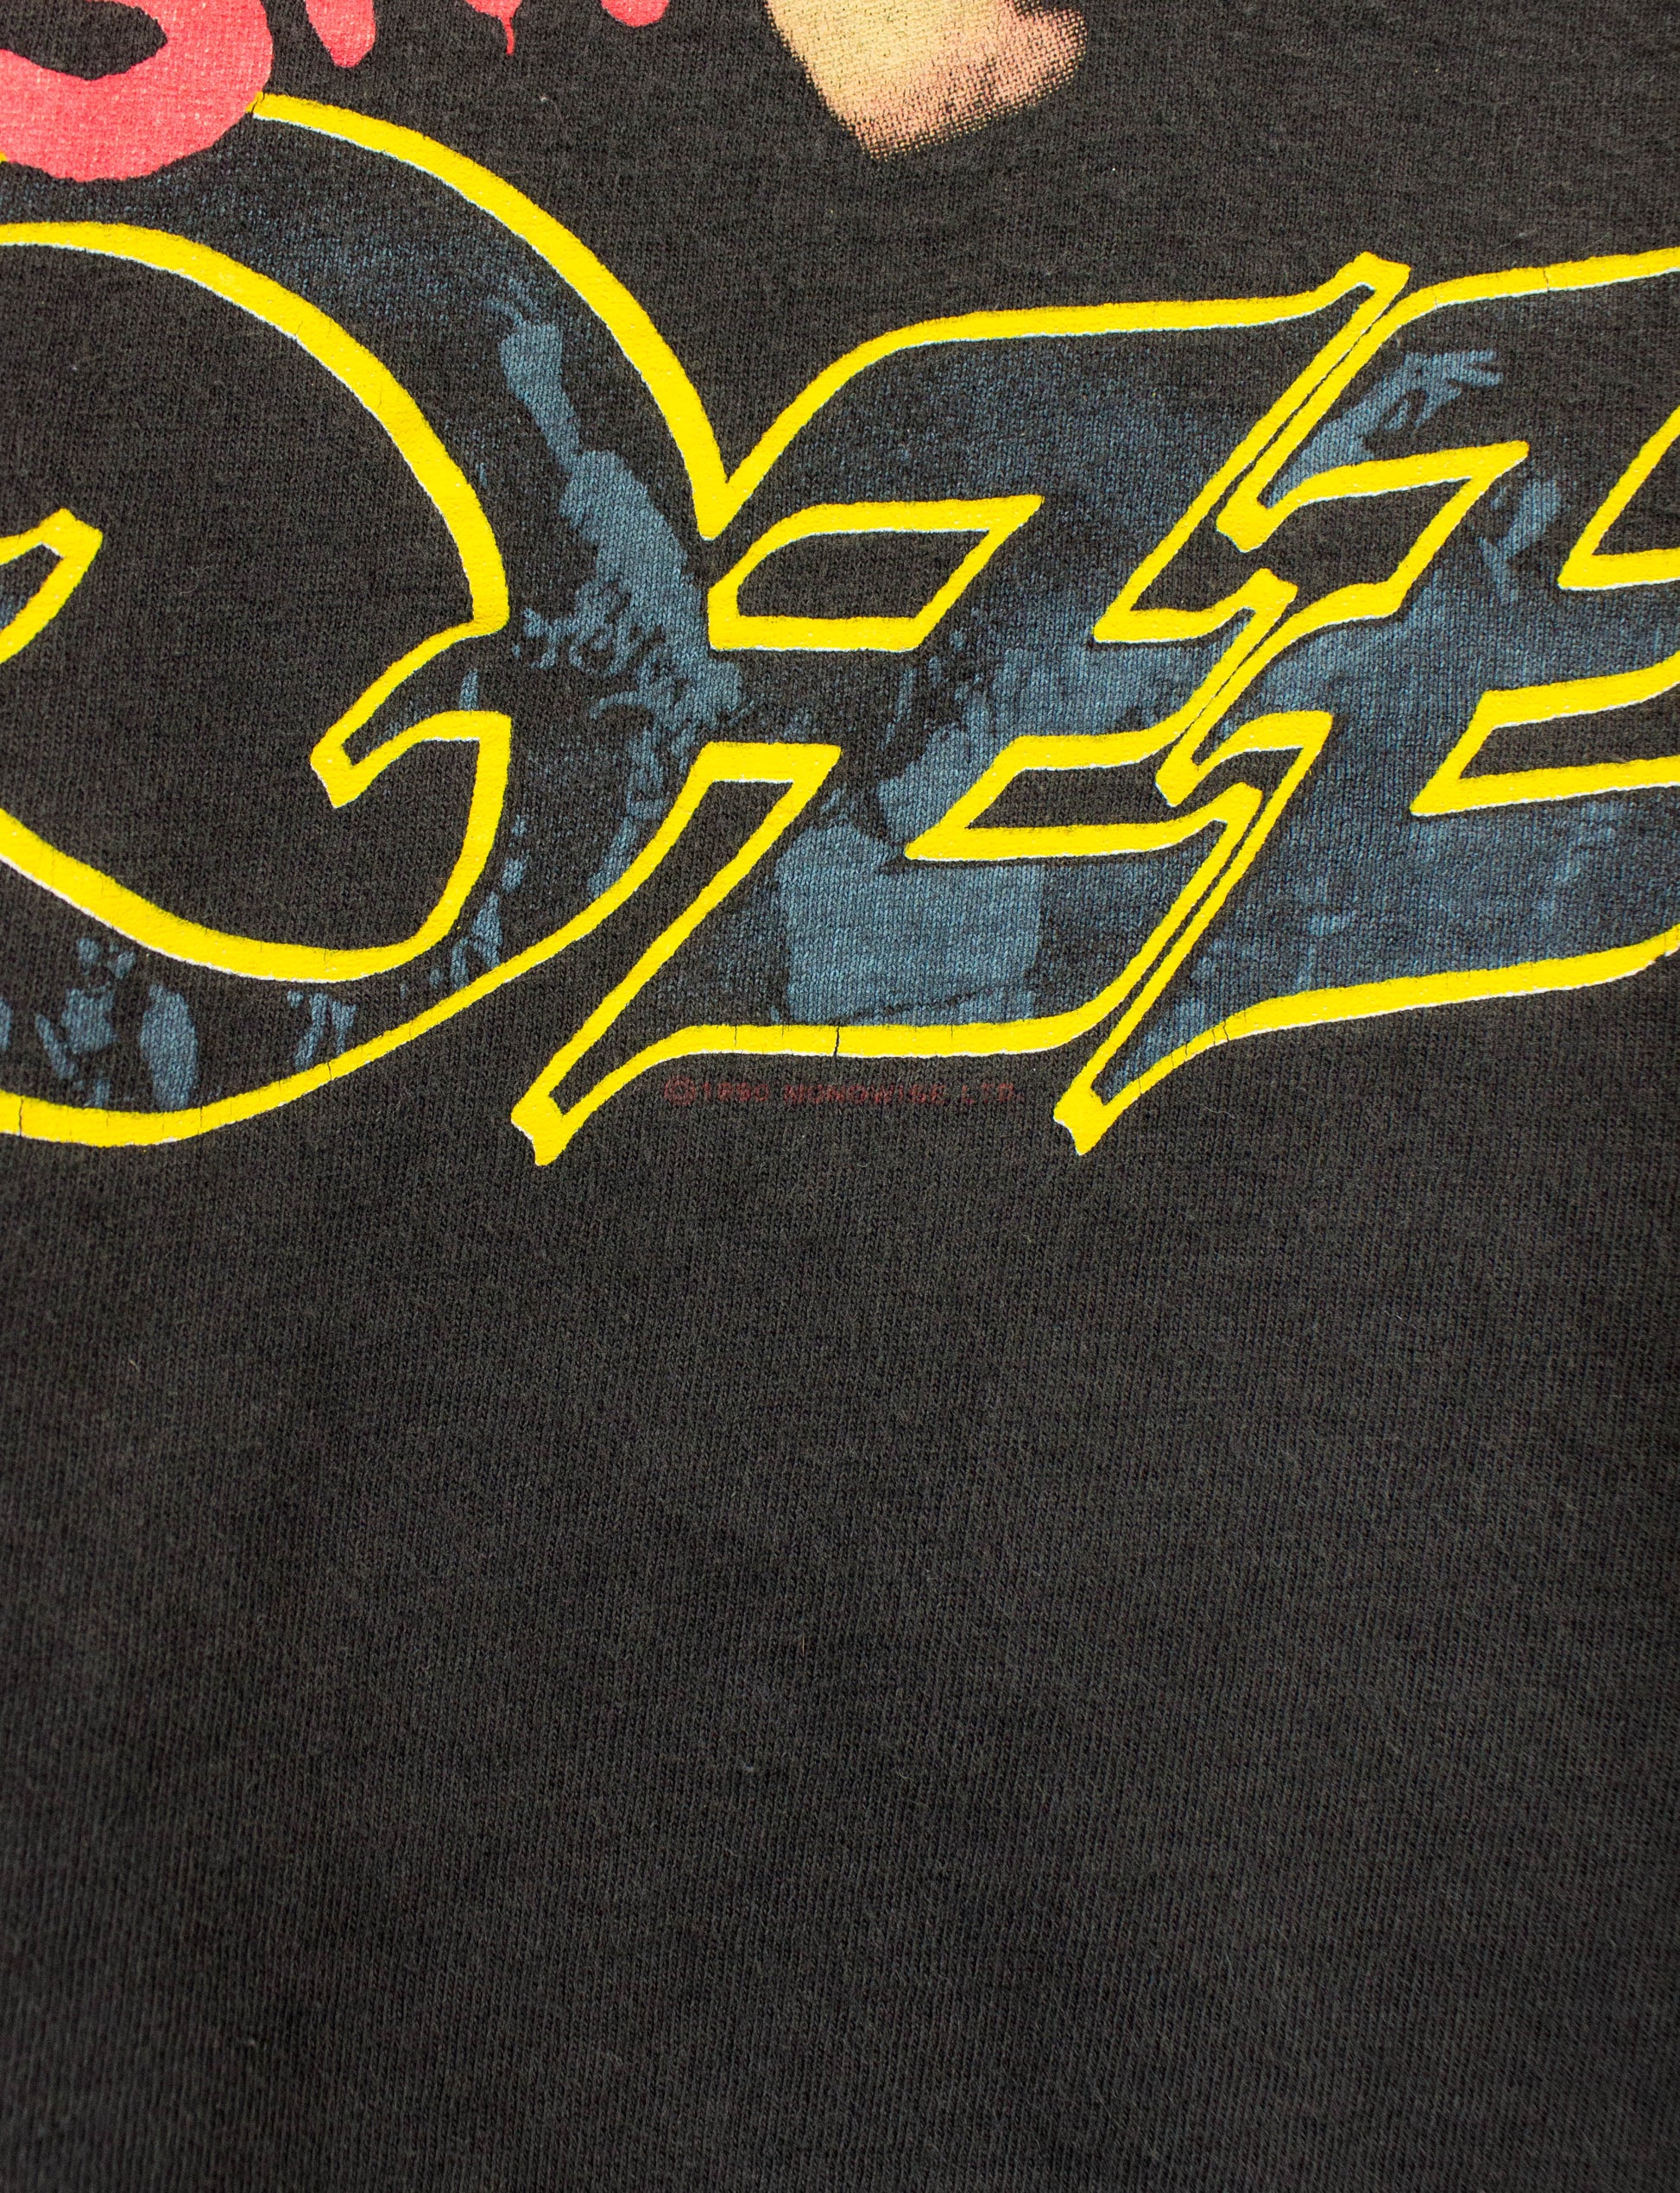 Vintage Ozzy Osbourne Concert T Shirt 1990 Just Say Ozzy Peace Sign Black Medium-Large